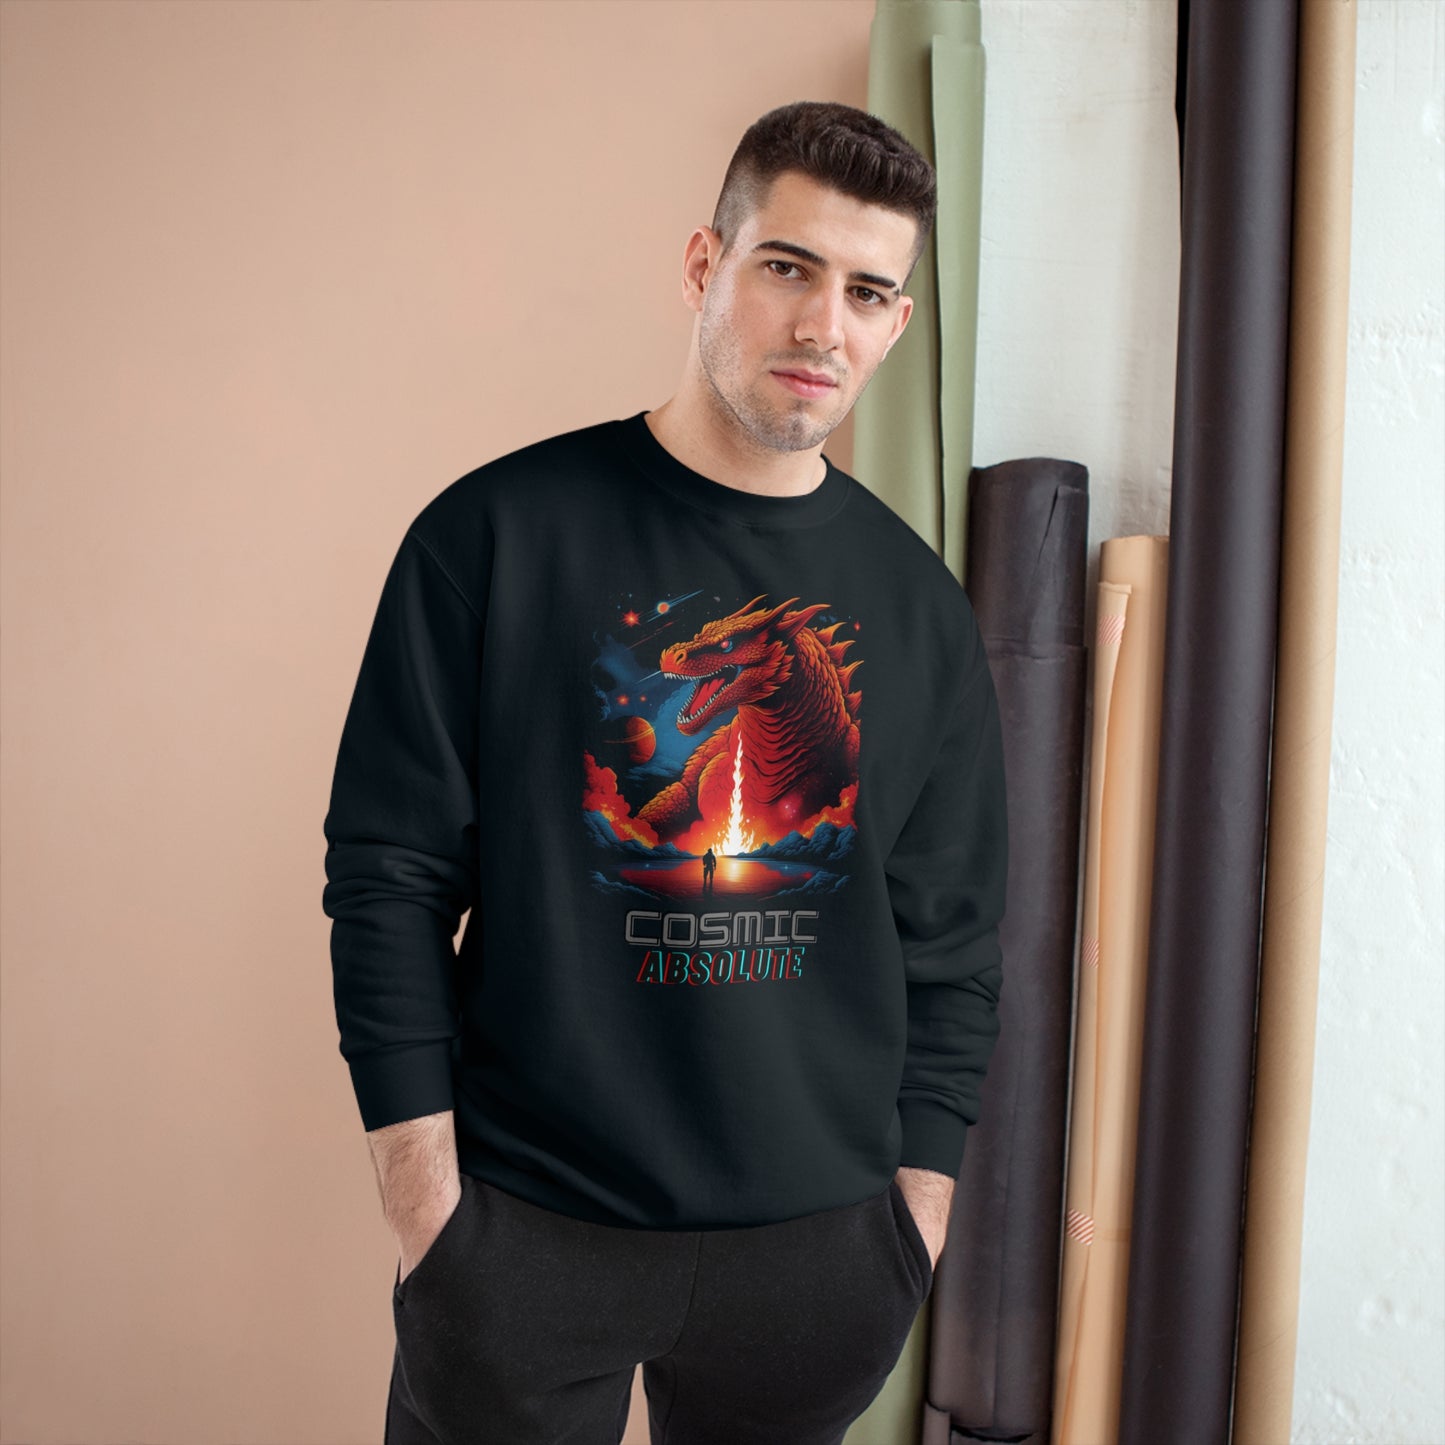 Dragon's Shadow: Fire and Fury Champion Sweatshirt